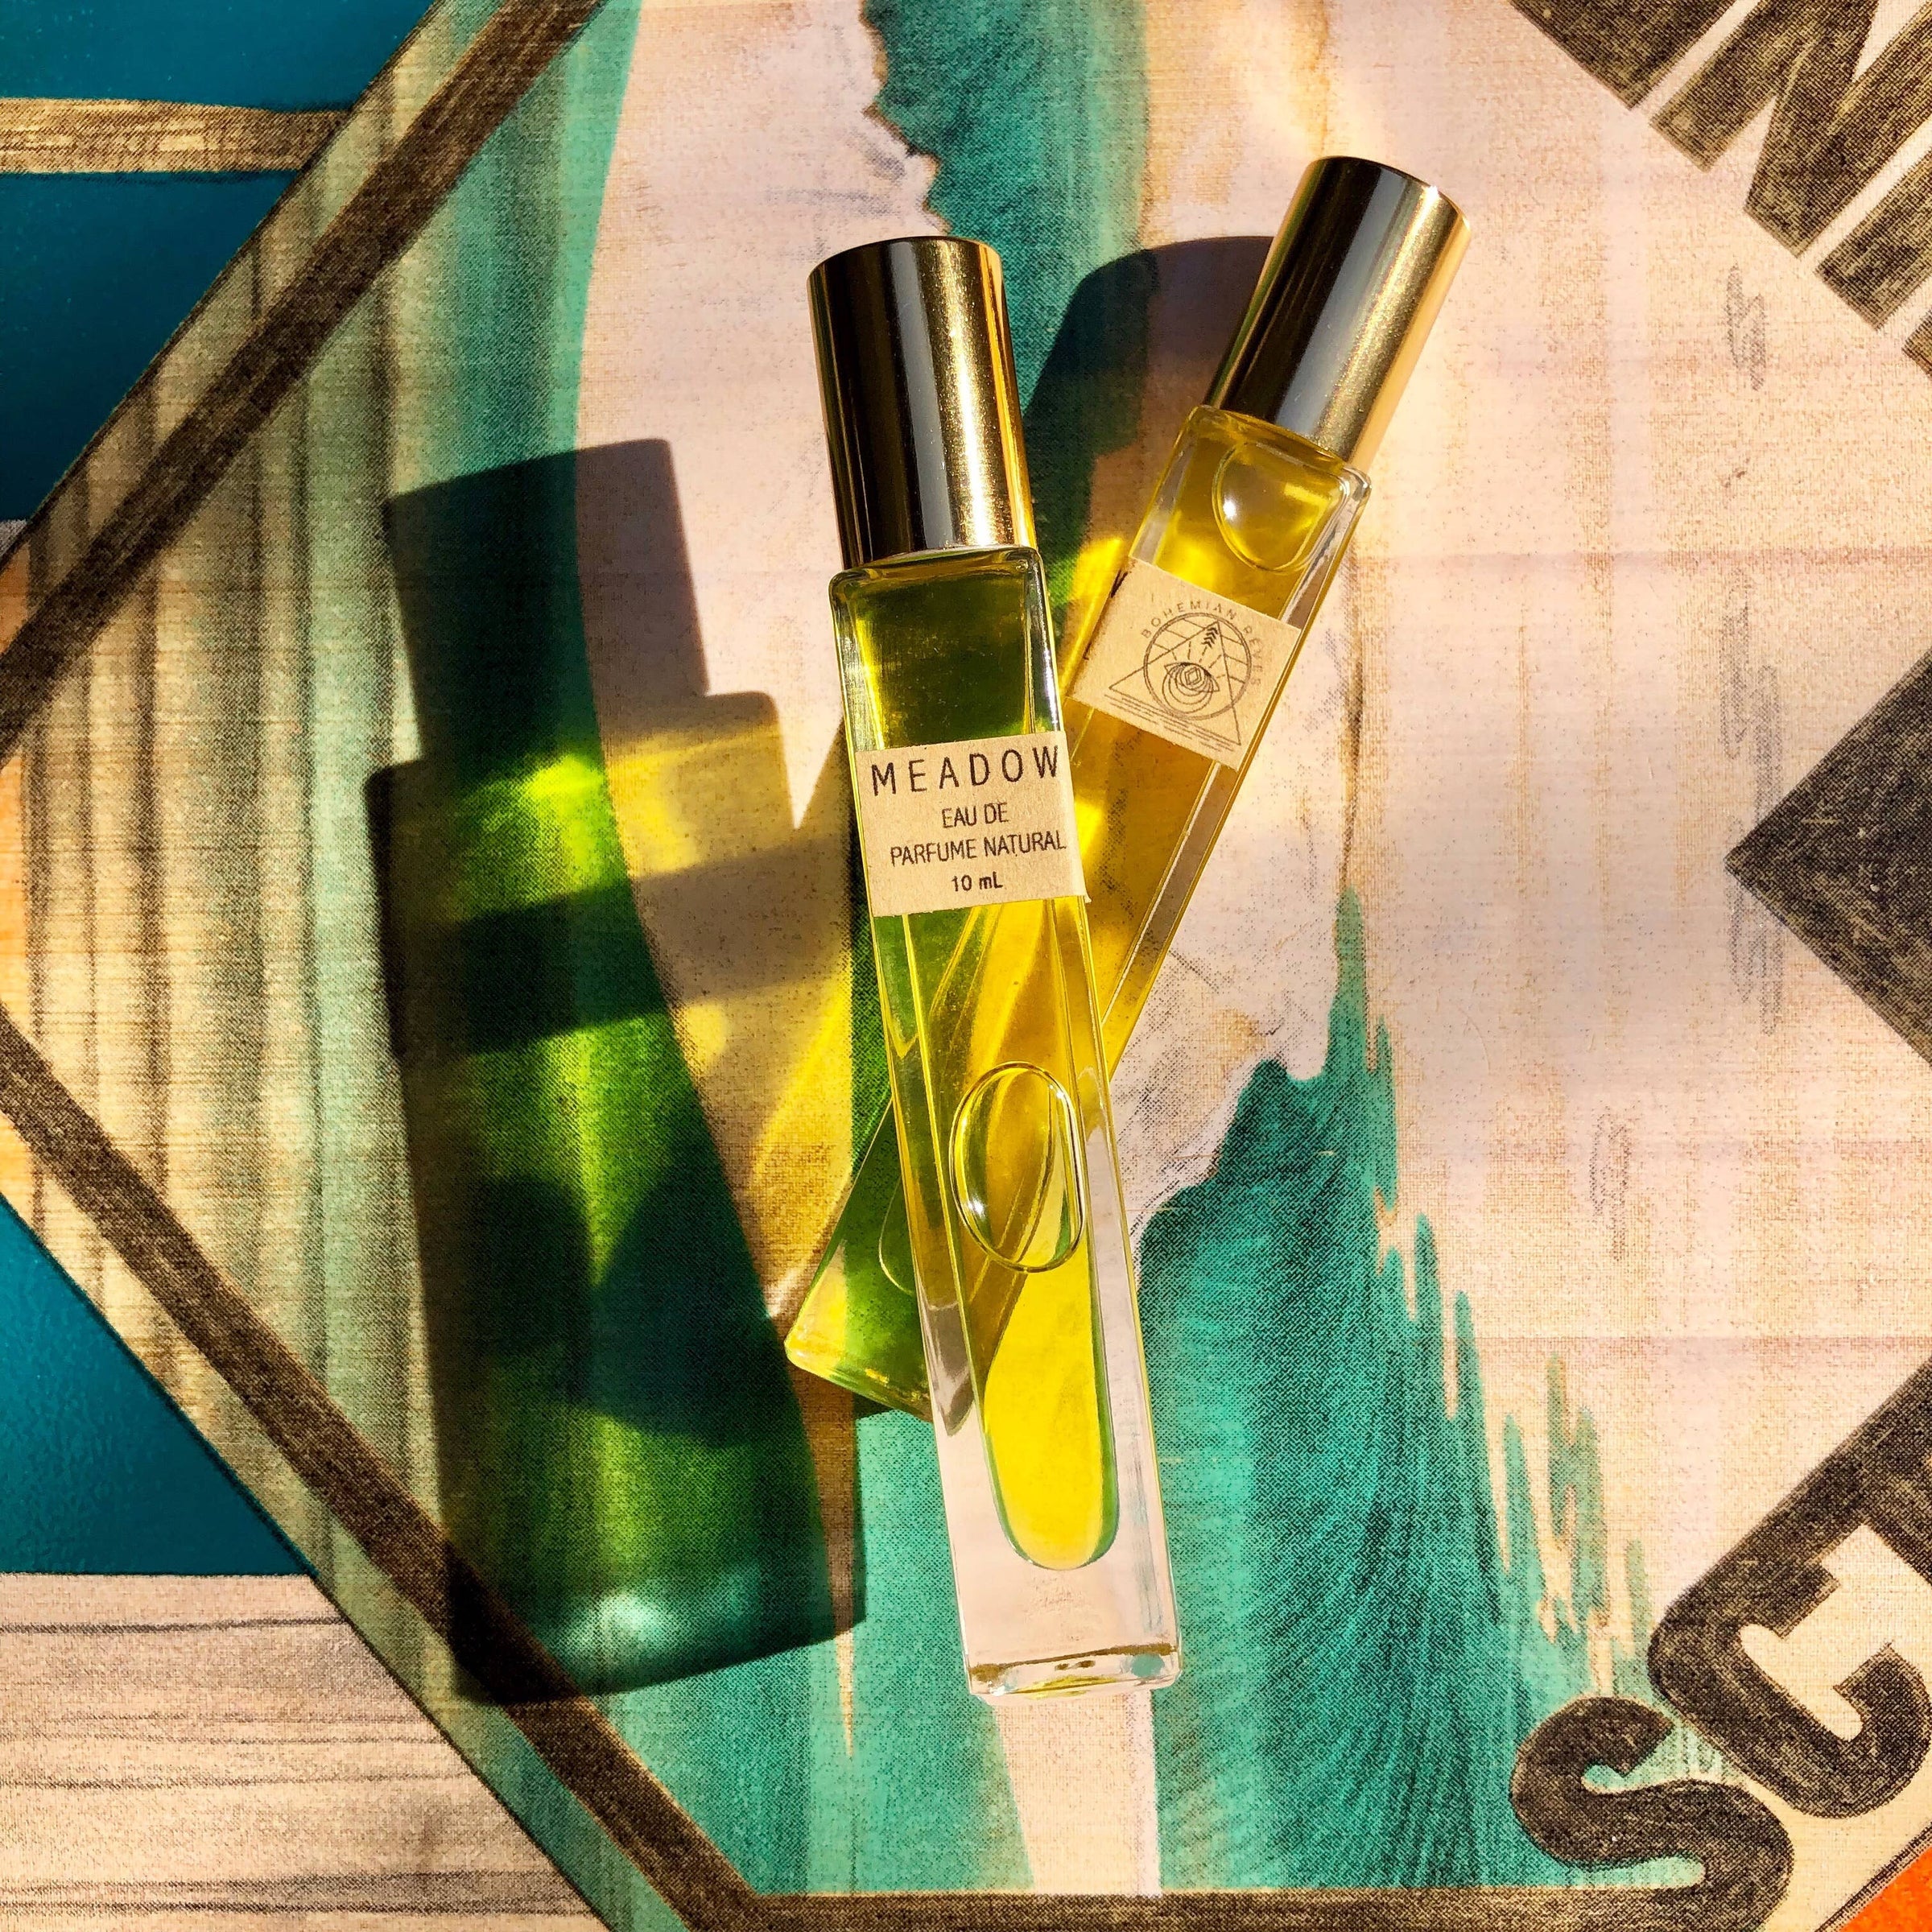 Bohemian Reves Botanical Perfume Review - Organic Beauty Lover